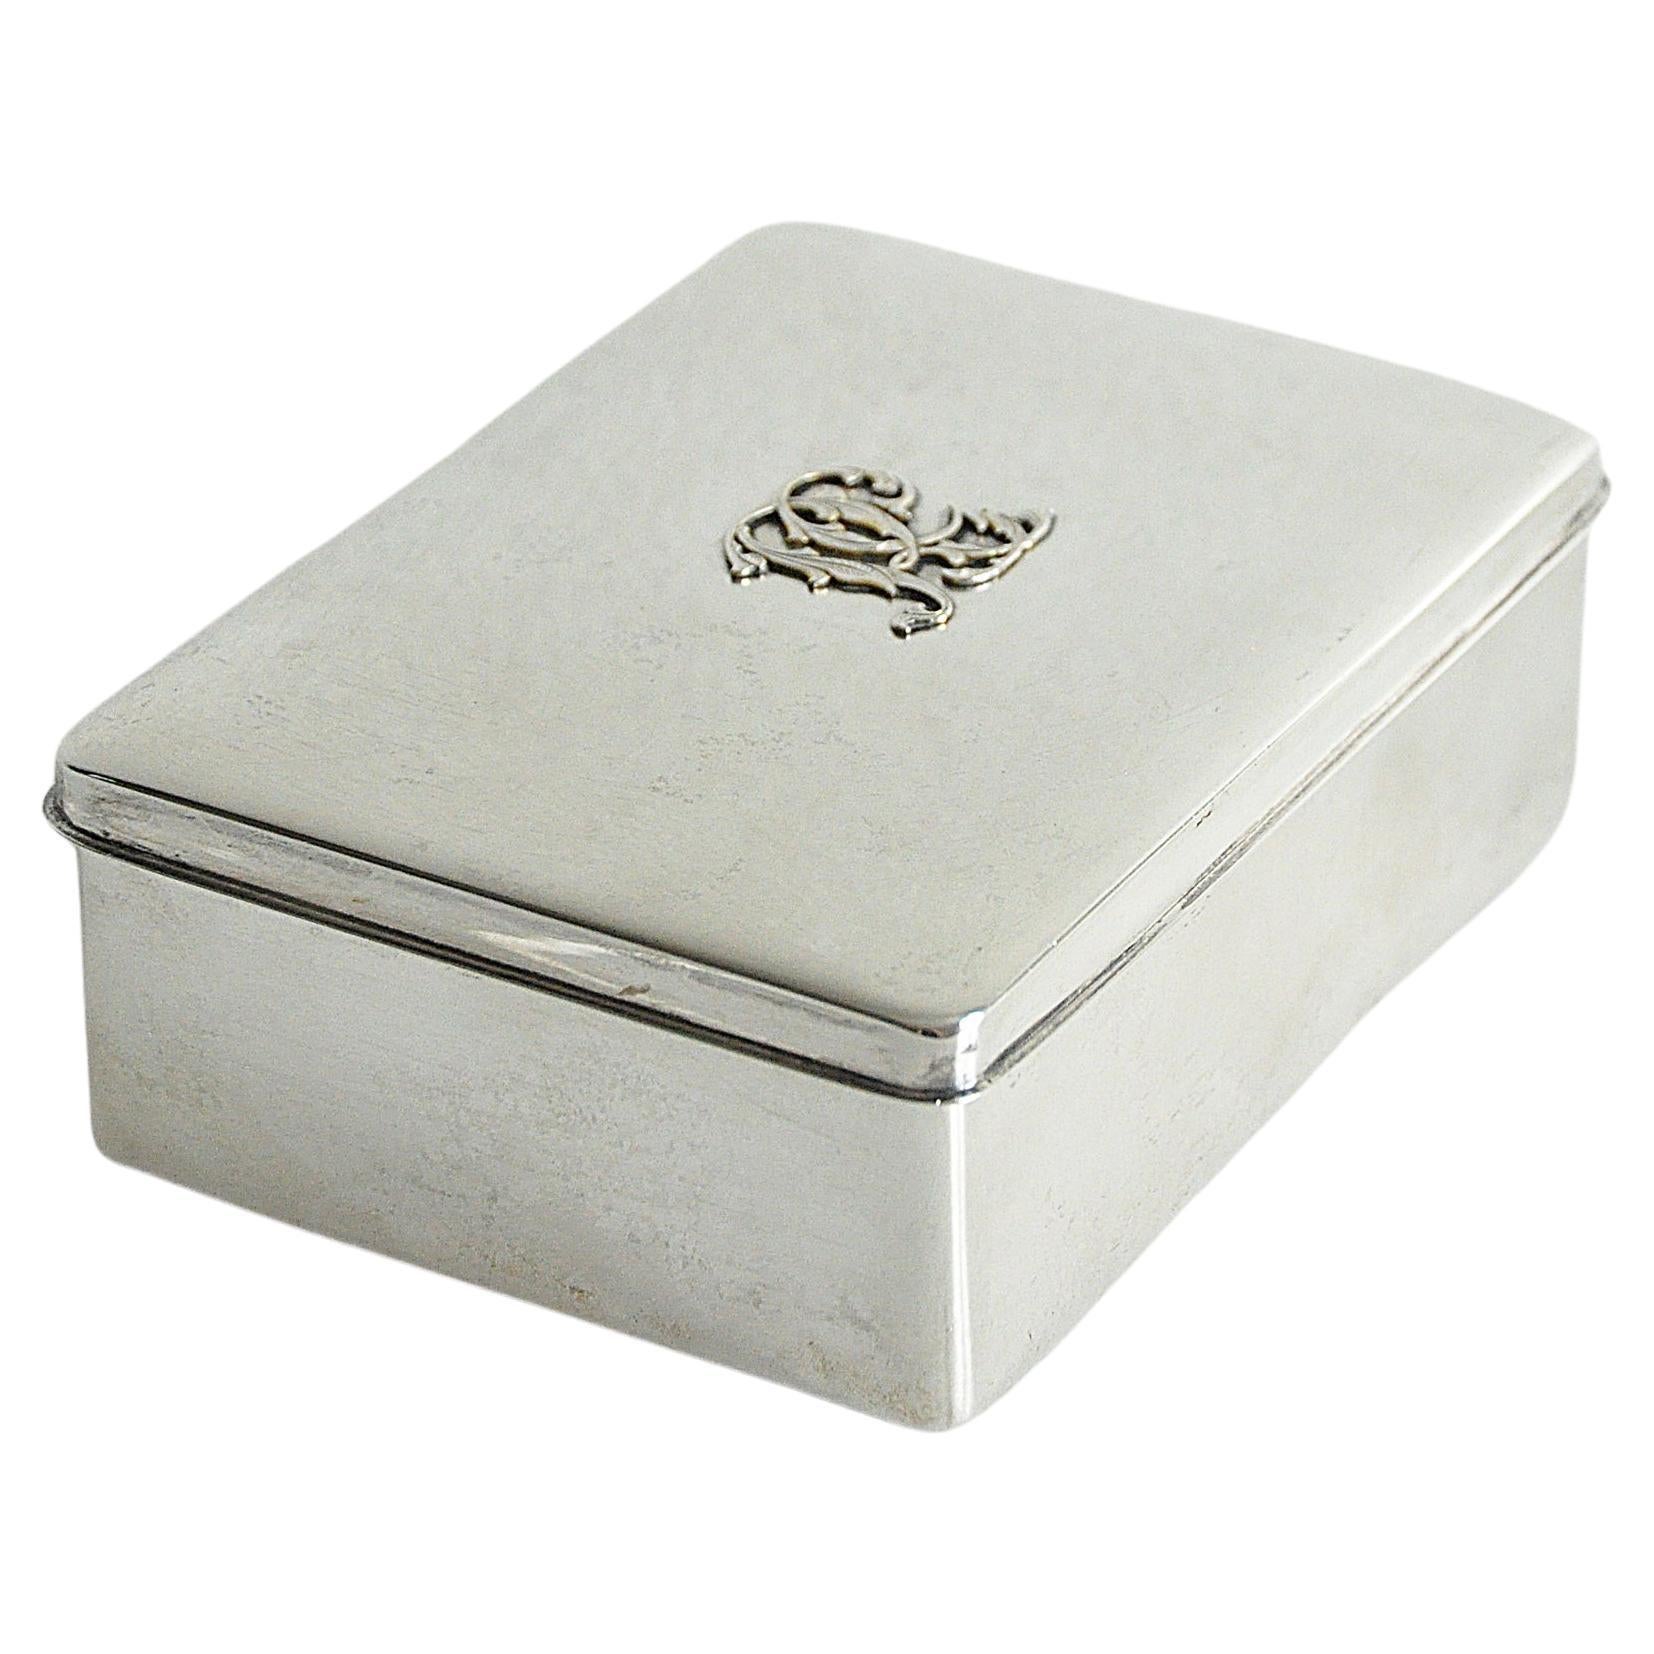 Scandinavian Modern Silver Box from C. G. Hallberg, Sweden -1937 For Sale